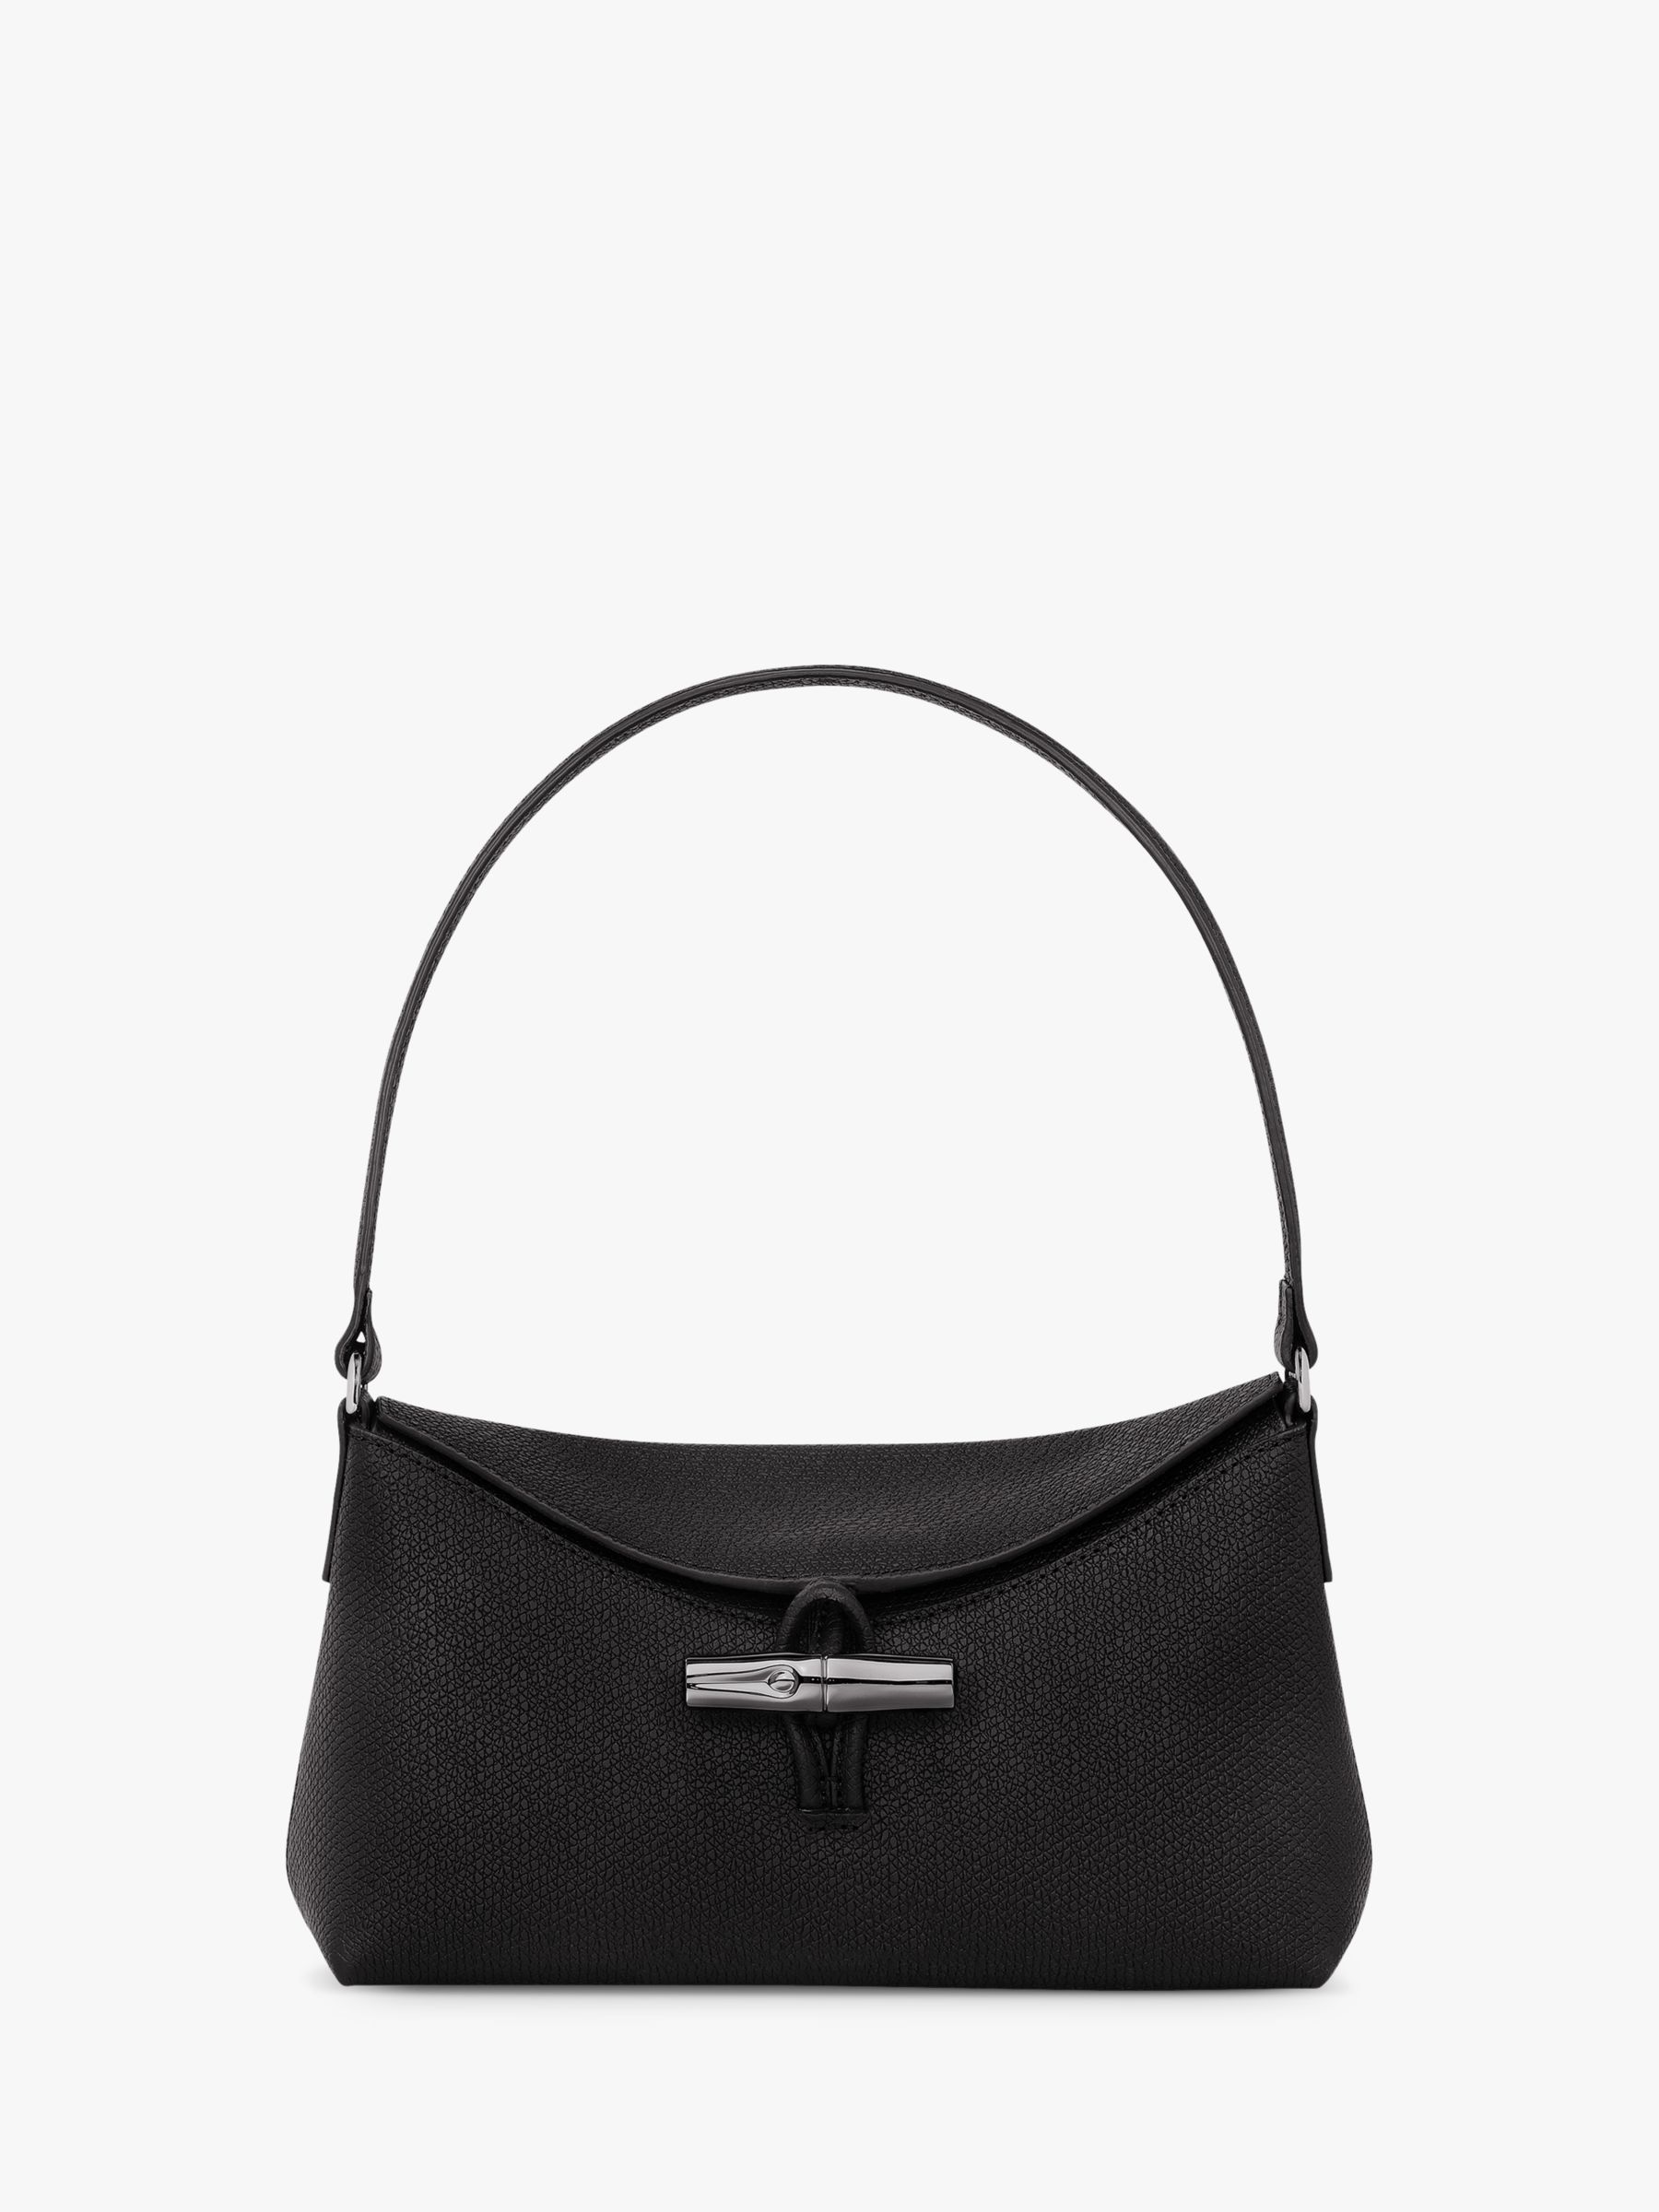 Longchamp Roseau Small Hobo Bag, Black at John Lewis & Partners